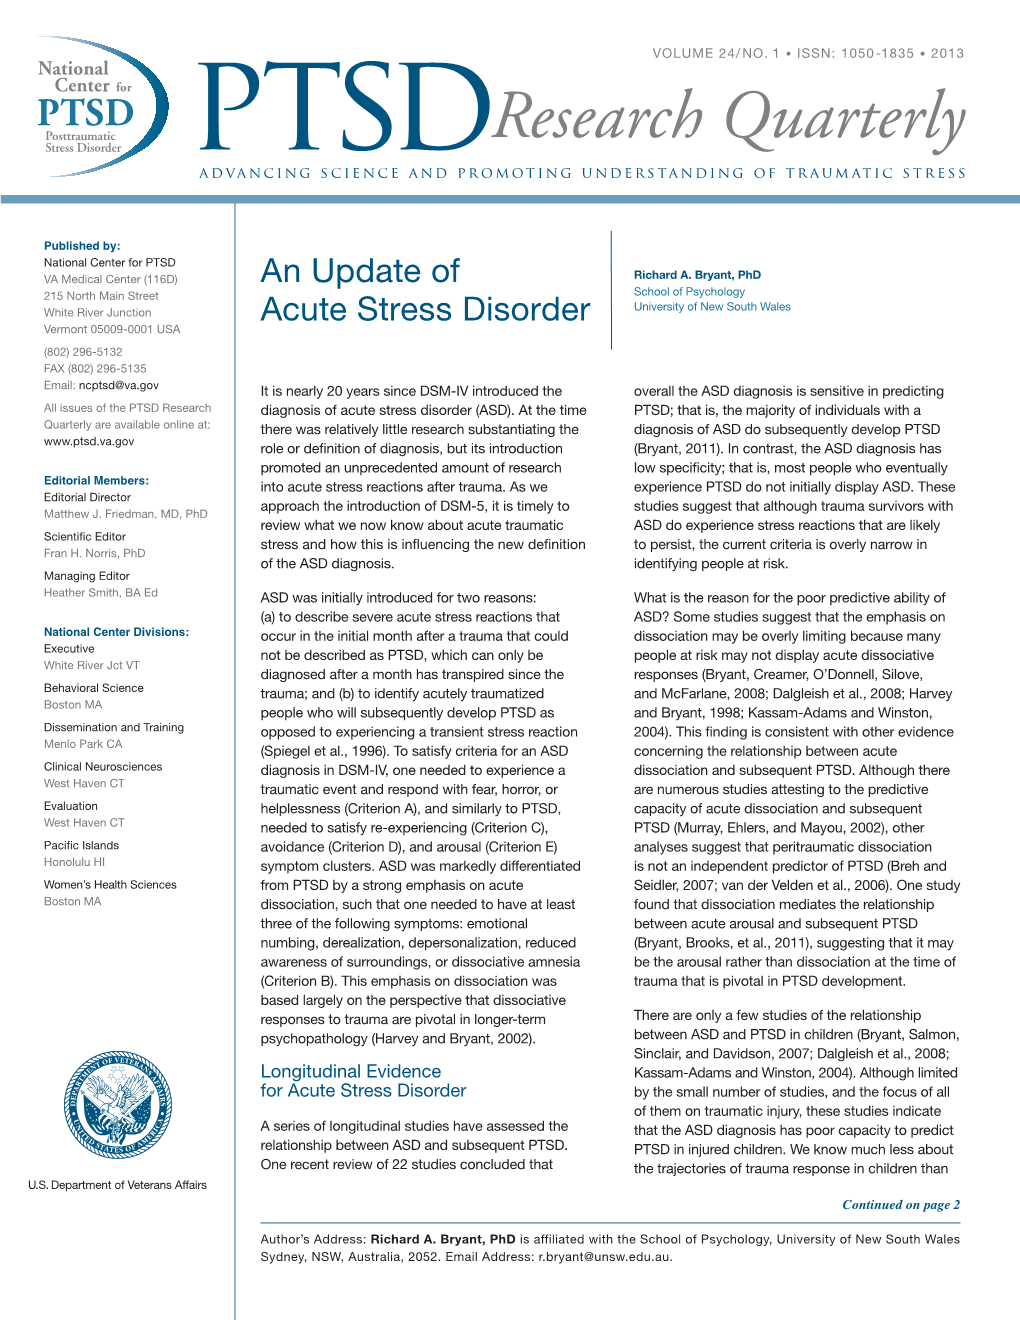 An Update of Acute Stress Disorder